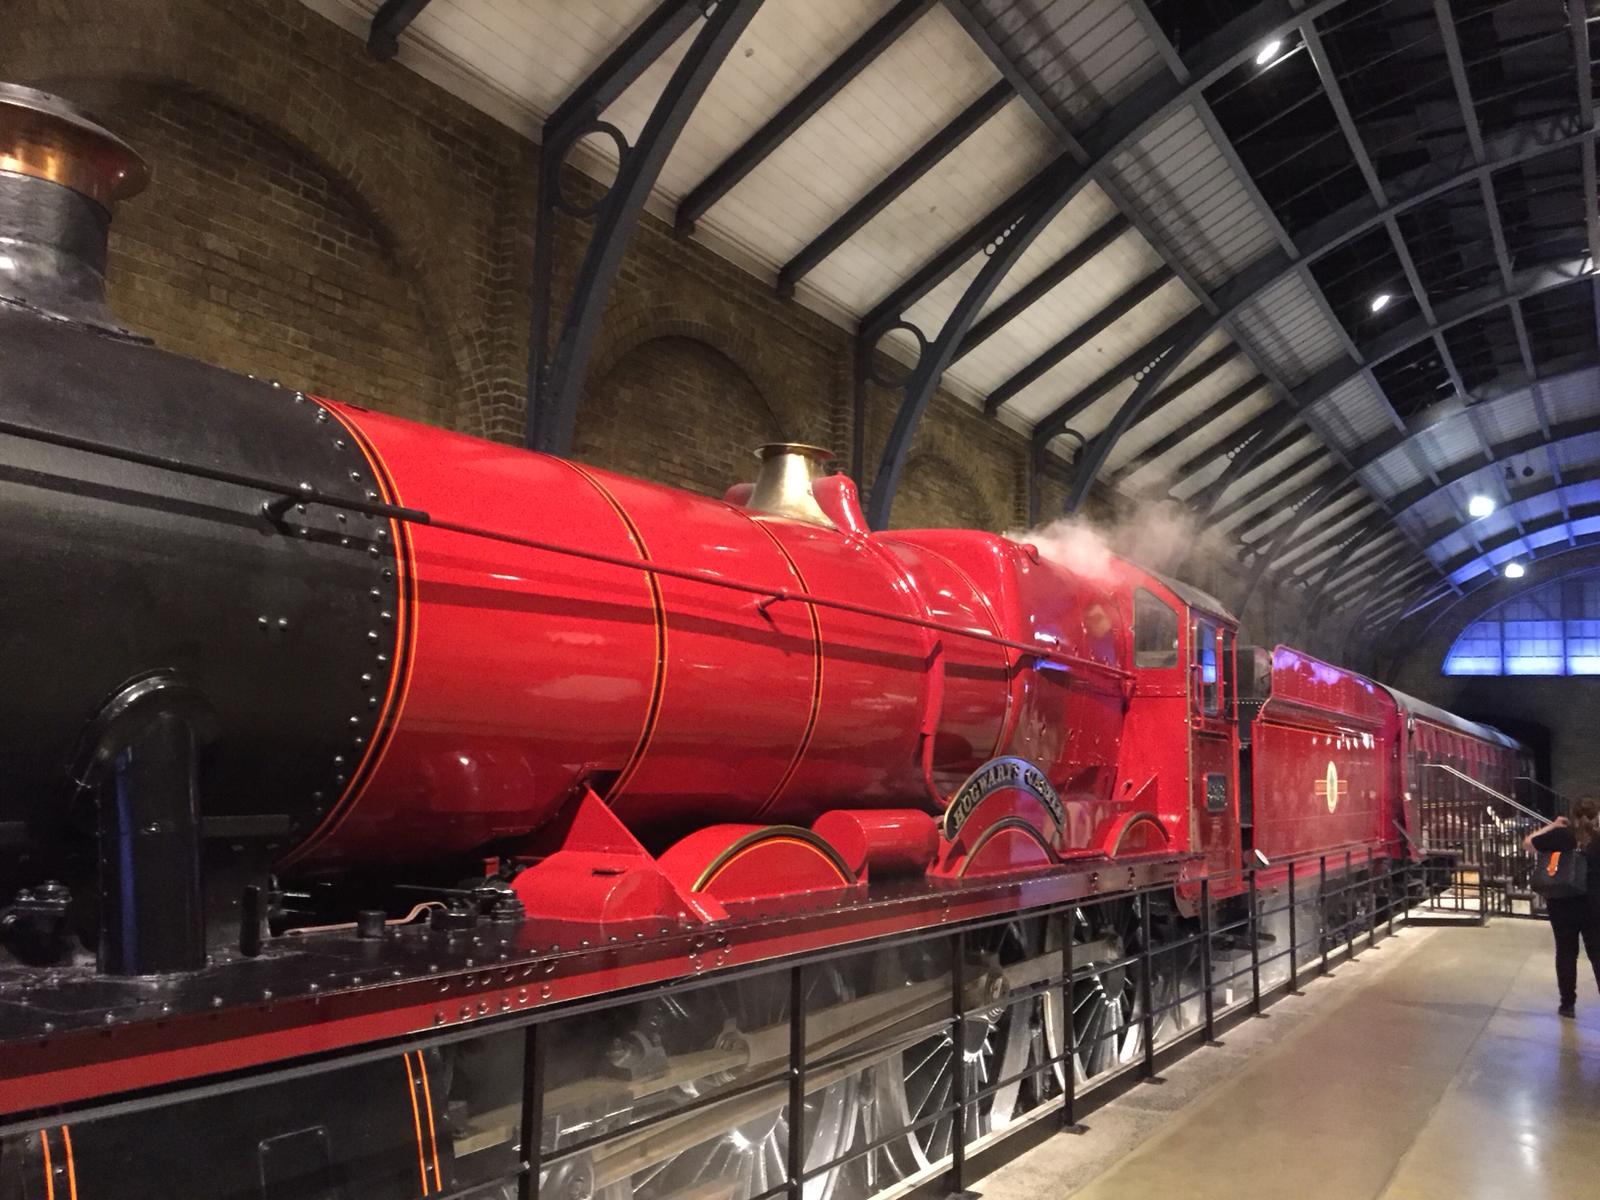 Visiting Harry Potter's Warner Bros. Studio in London